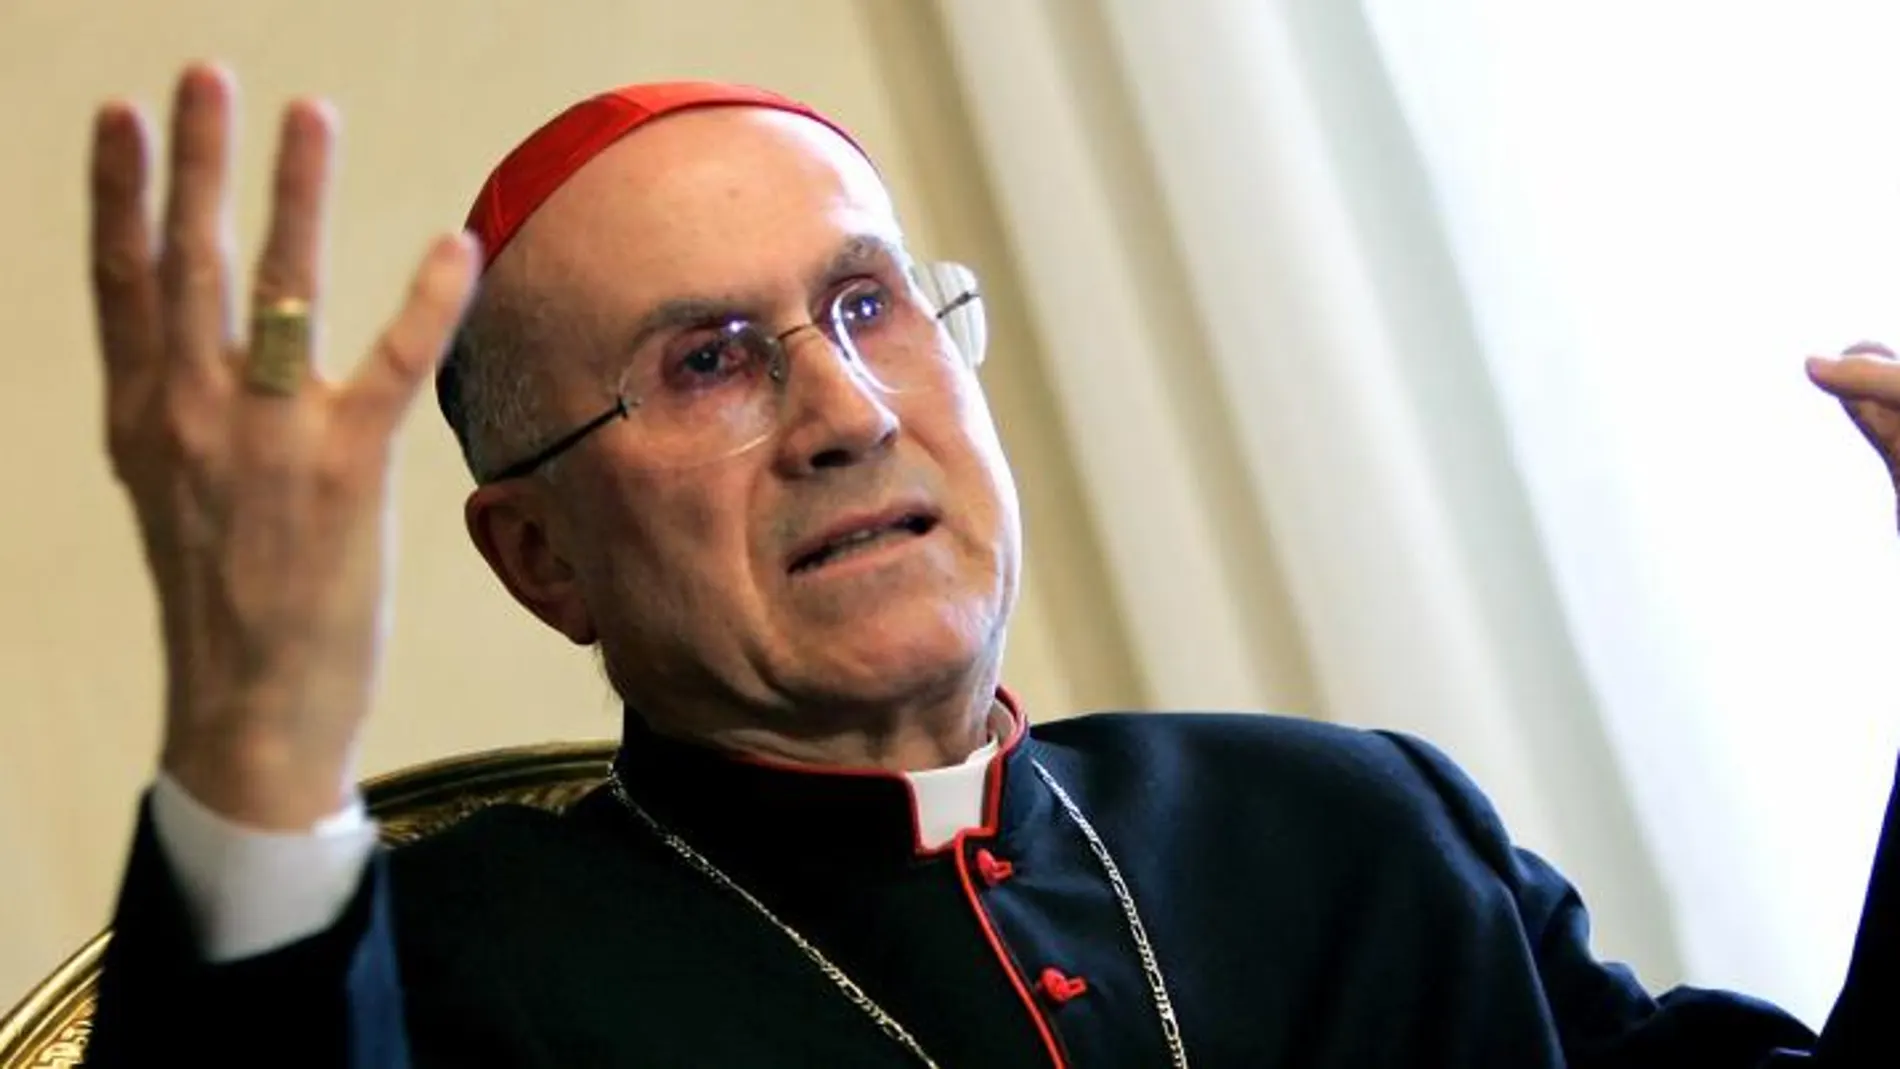 Tarsicio Bertone, cardenal camarlengo